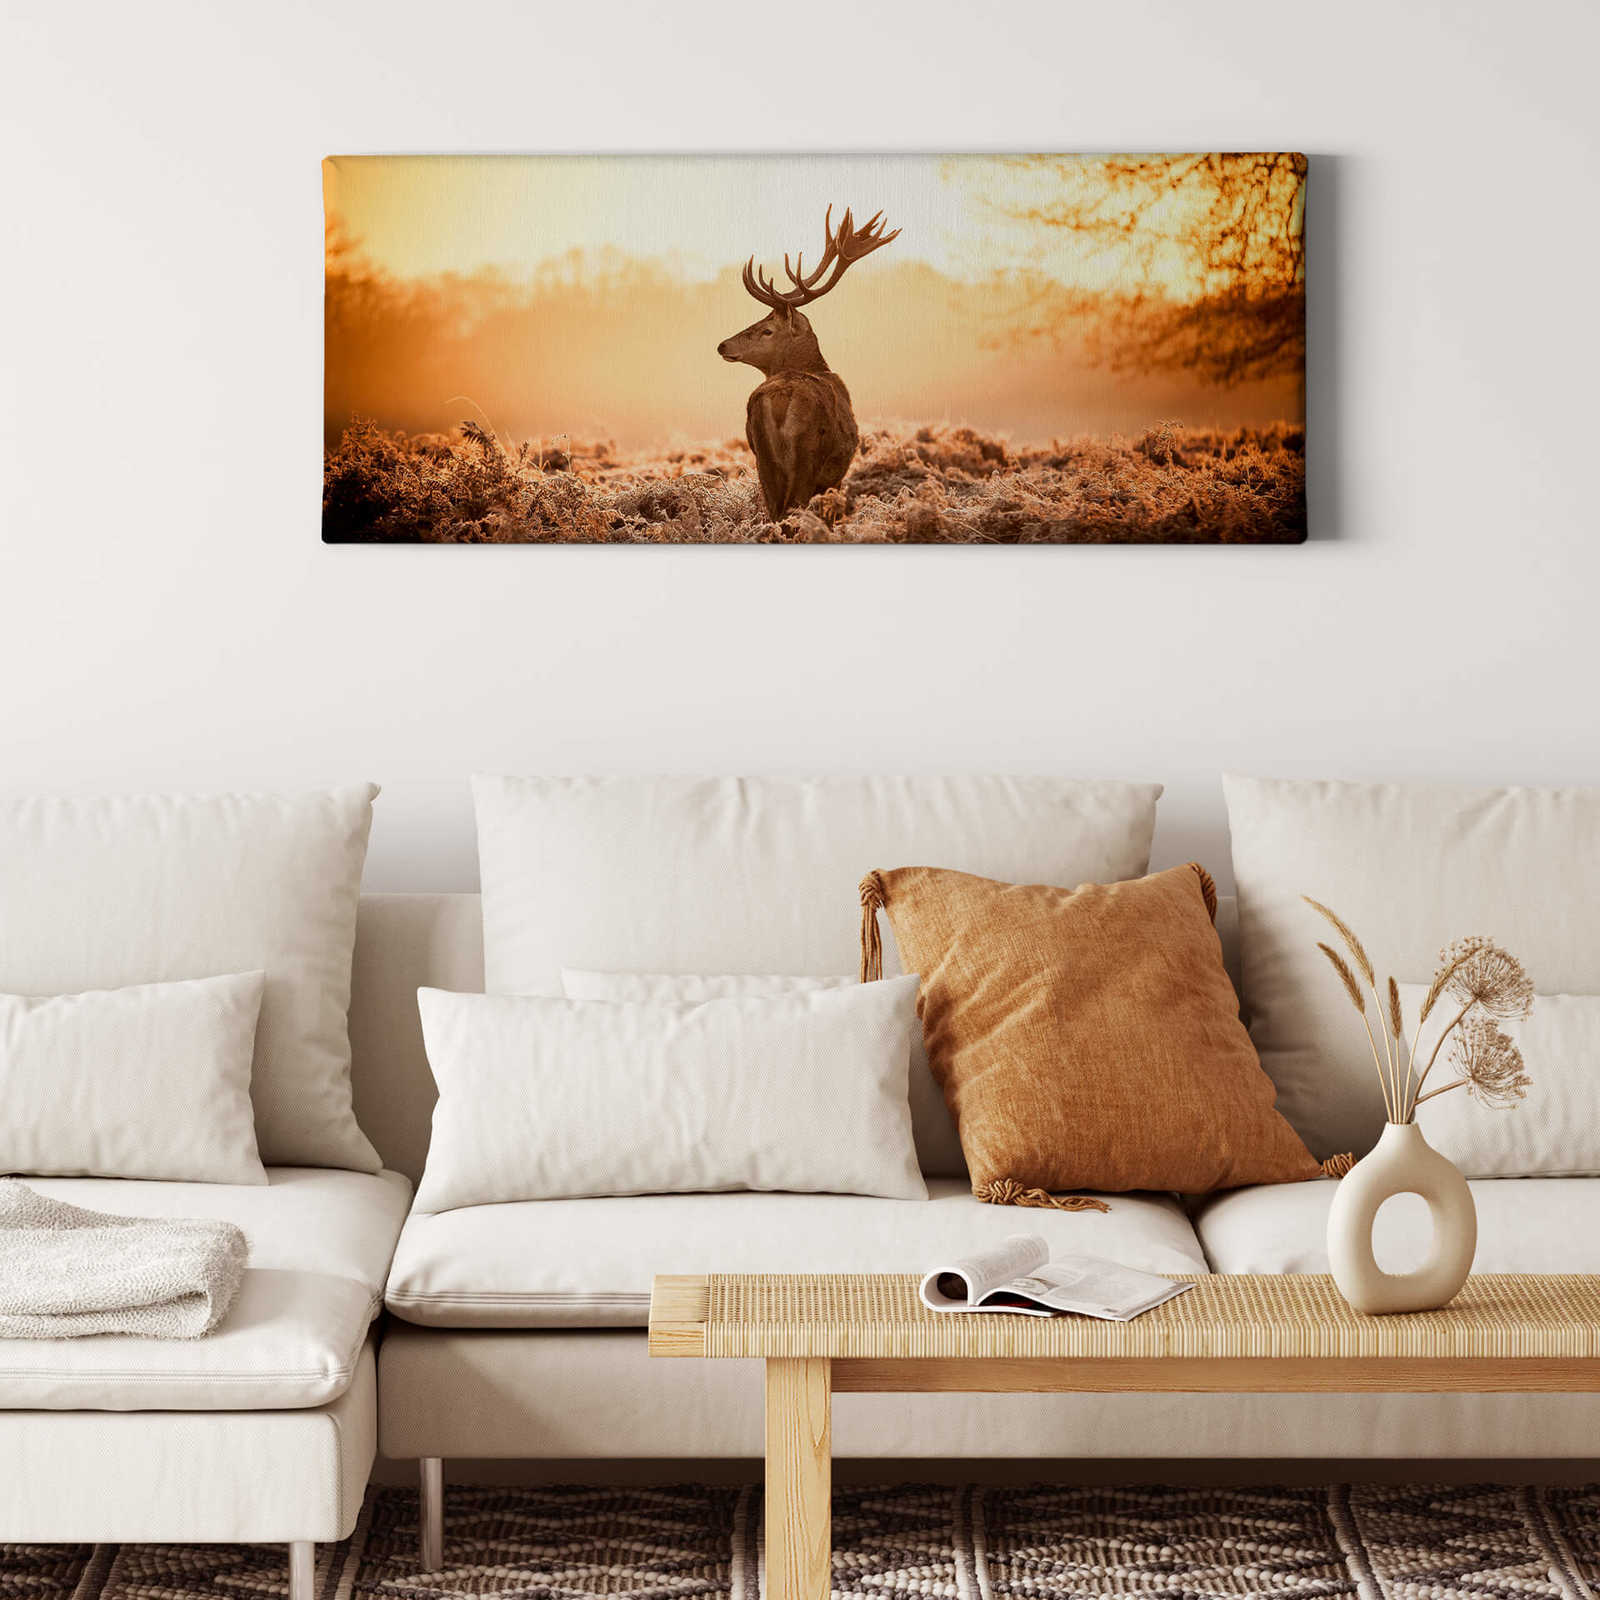             Panoramic canvas picture deer in sunlight – brown, orange
        